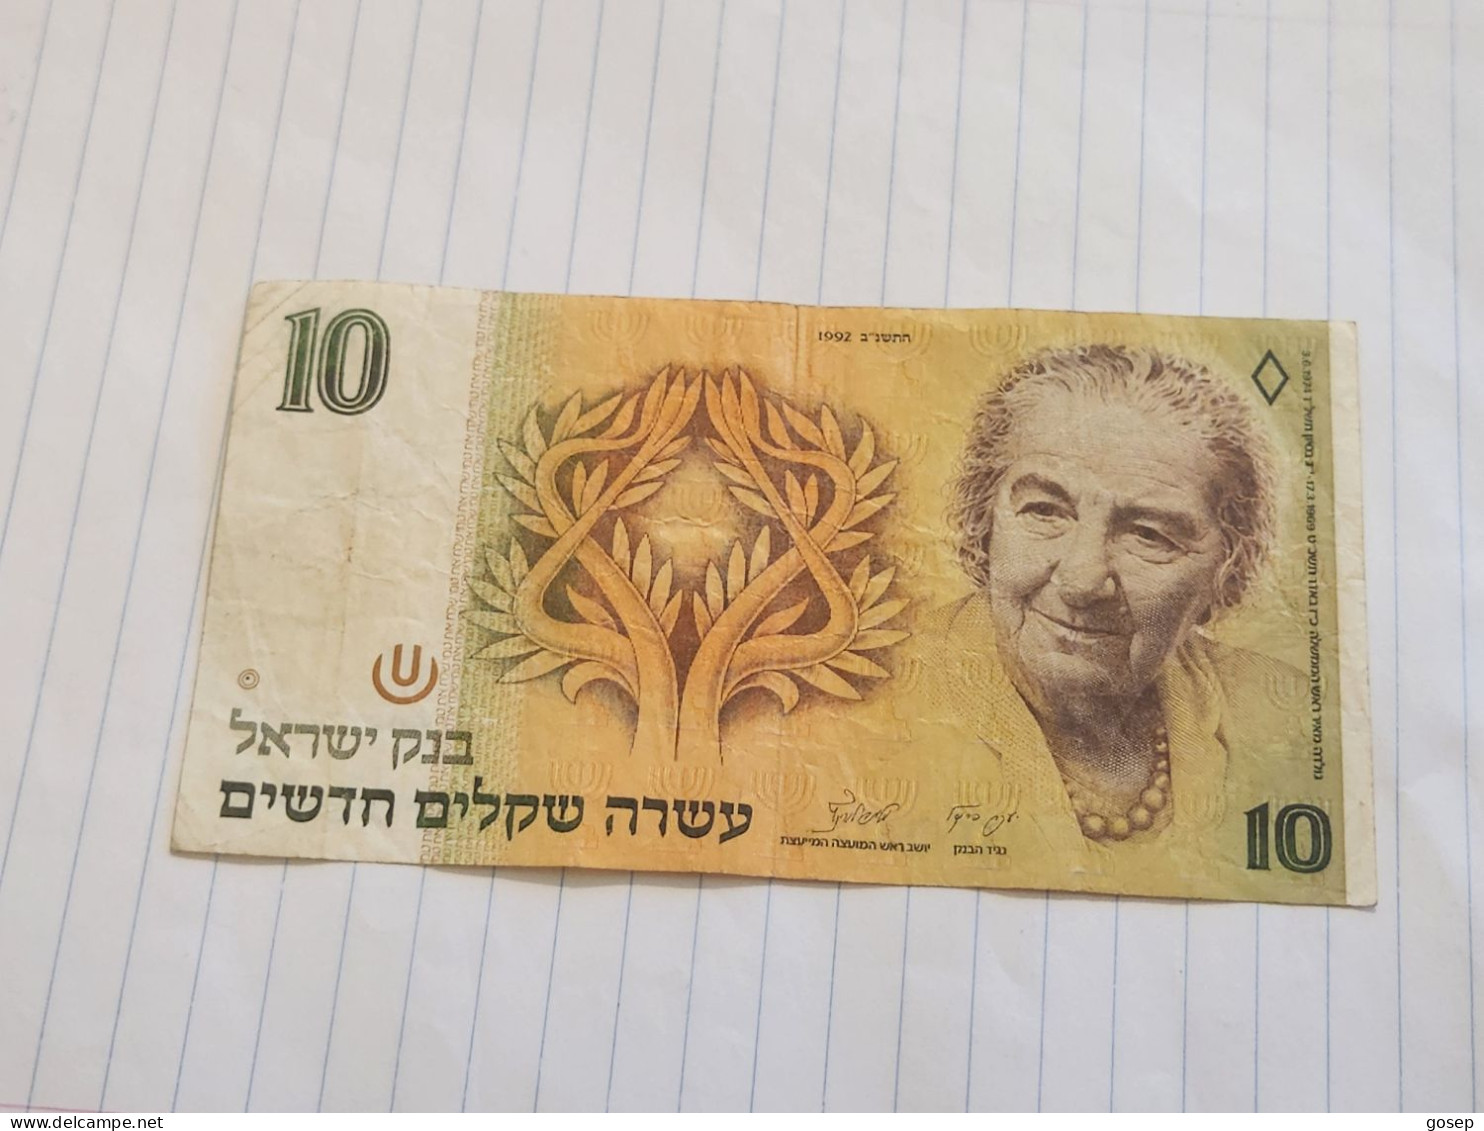 Israel-10 NEW SHEQELIM-GOLDA MEIR-(1992)(541)(LORINCZ/FRENKEL)-(0950877603)-ritr Pen-used-bank Note - Israël